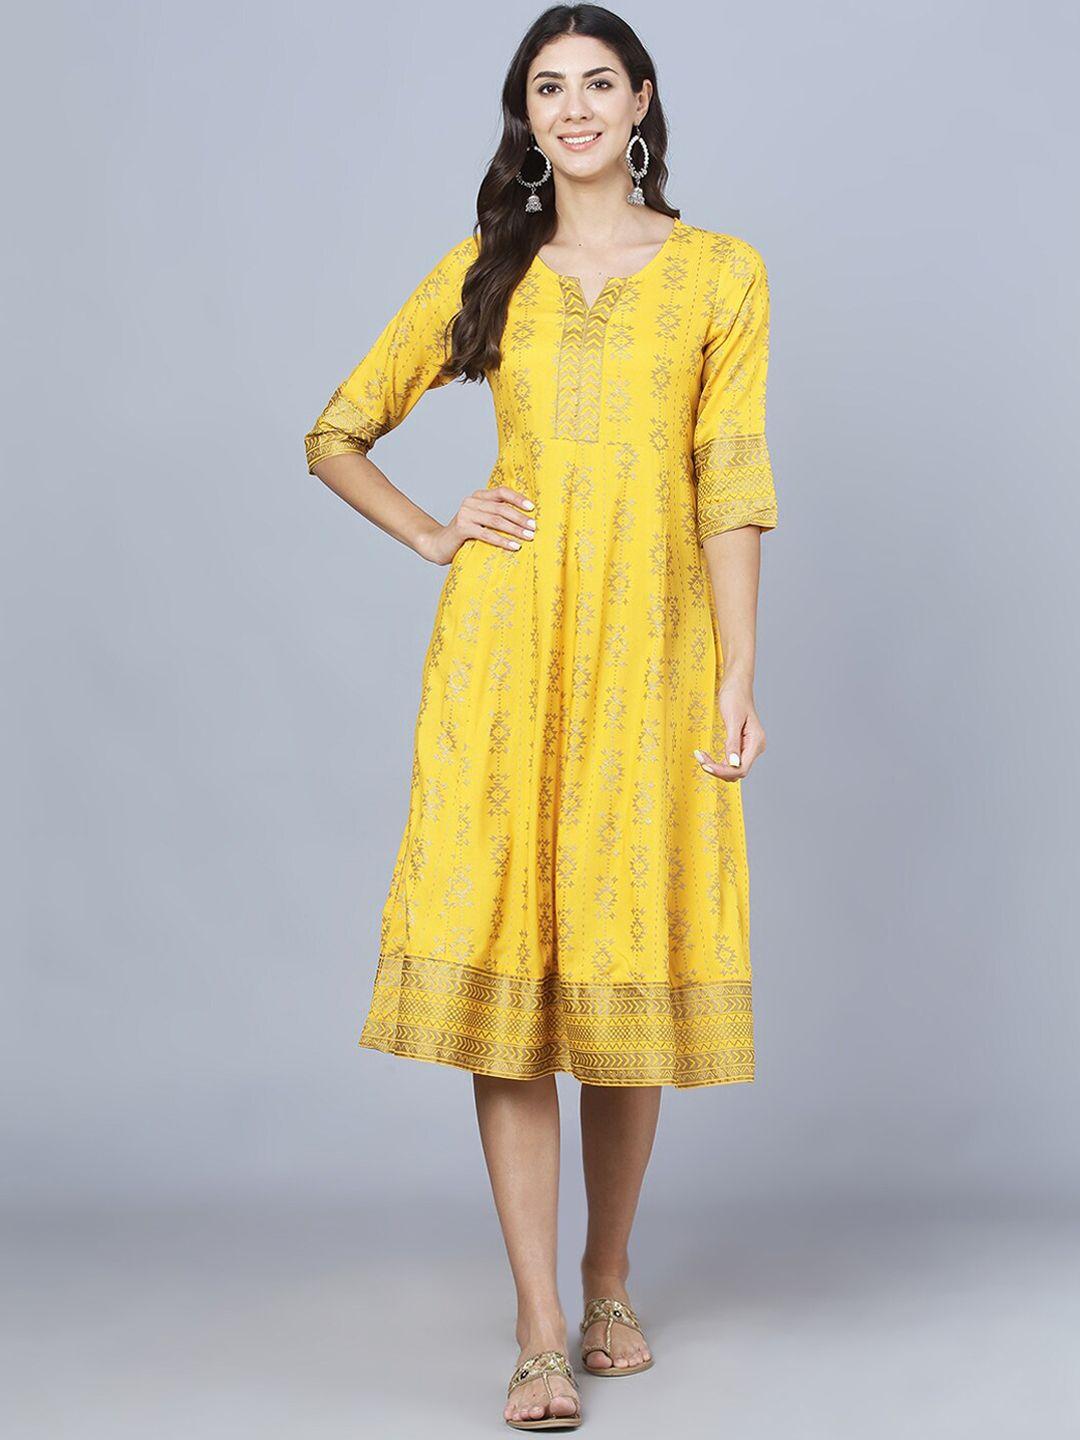 daamina women yellow printed flared ethnic dresses